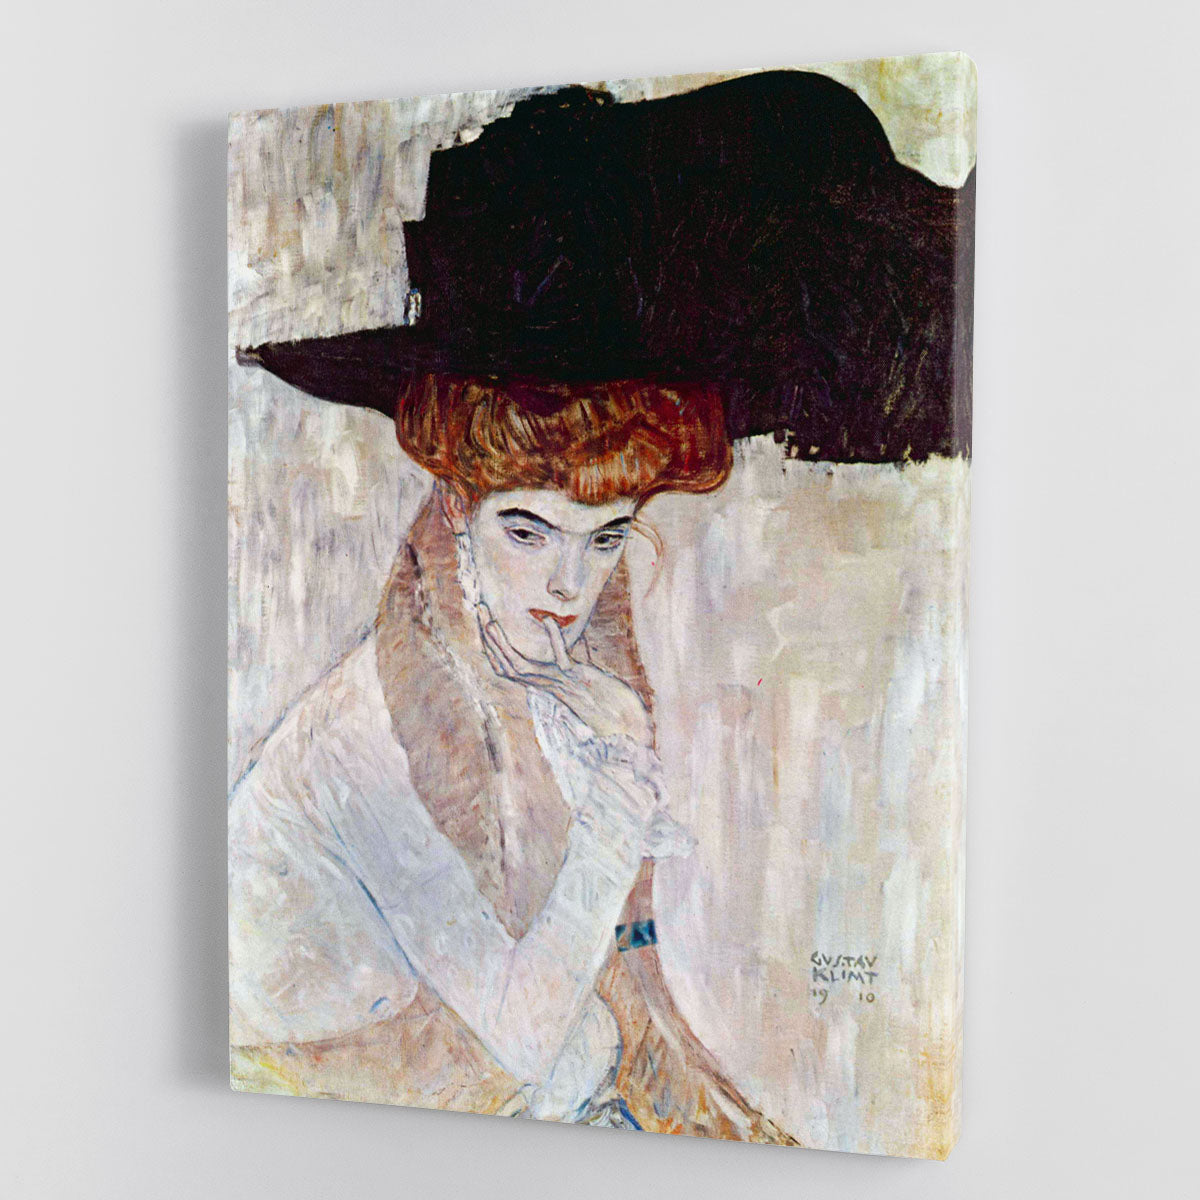 The Black Hat by Klimt Canvas Print or Poster - Canvas Art Rocks - 1